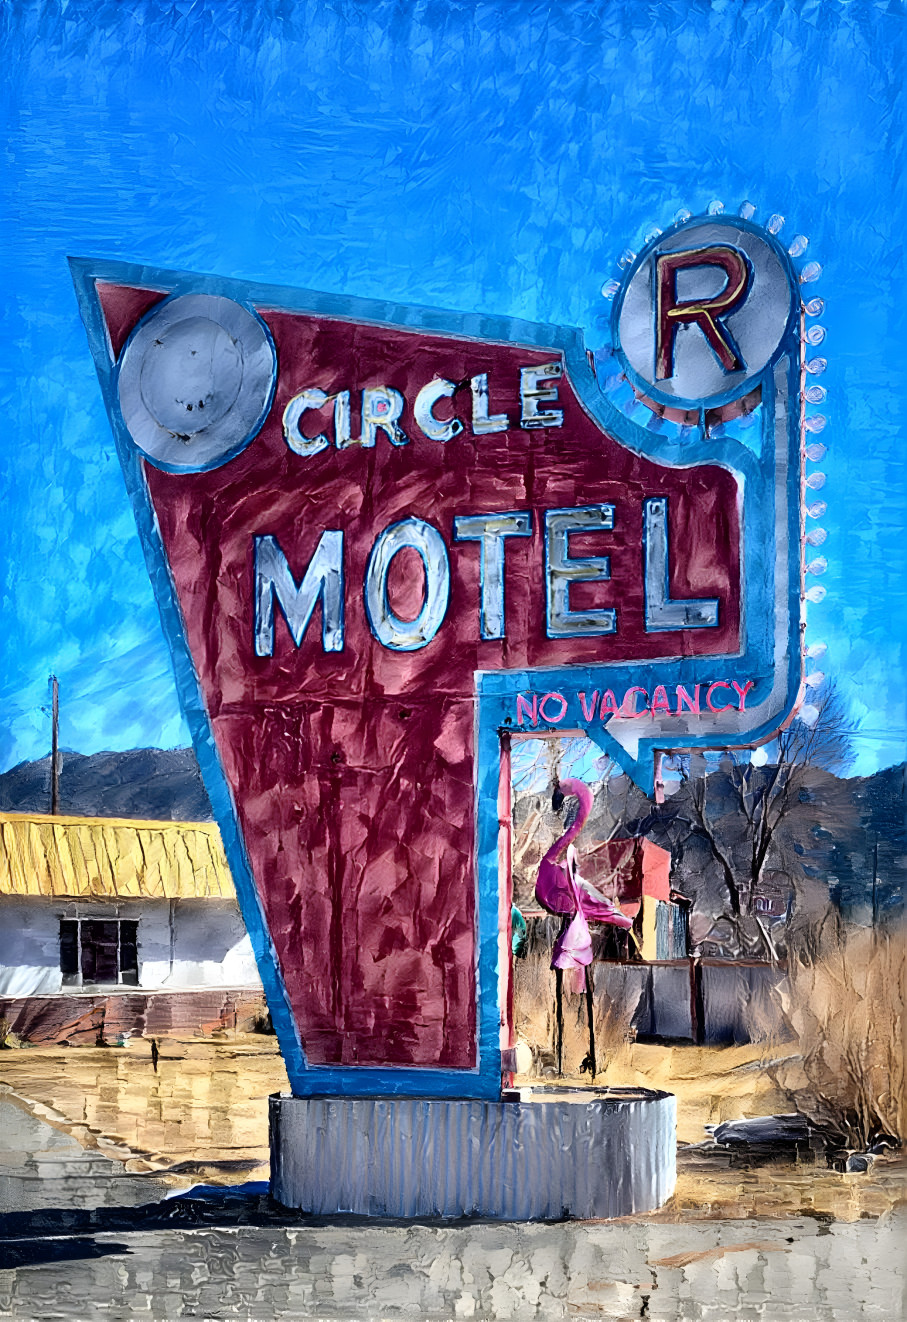 Circle R Motel